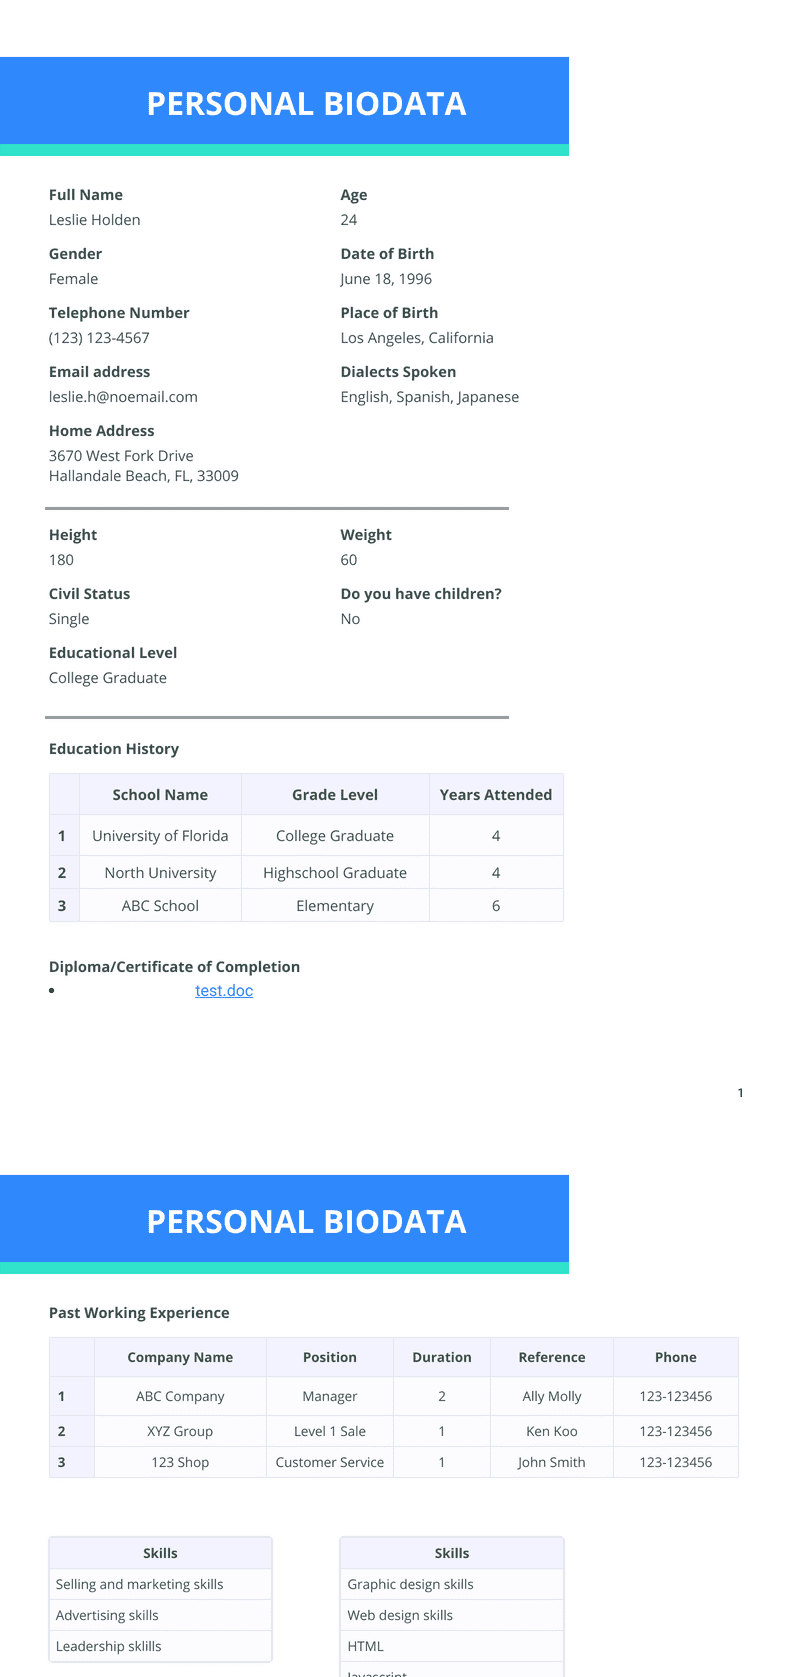 Personal Biodata